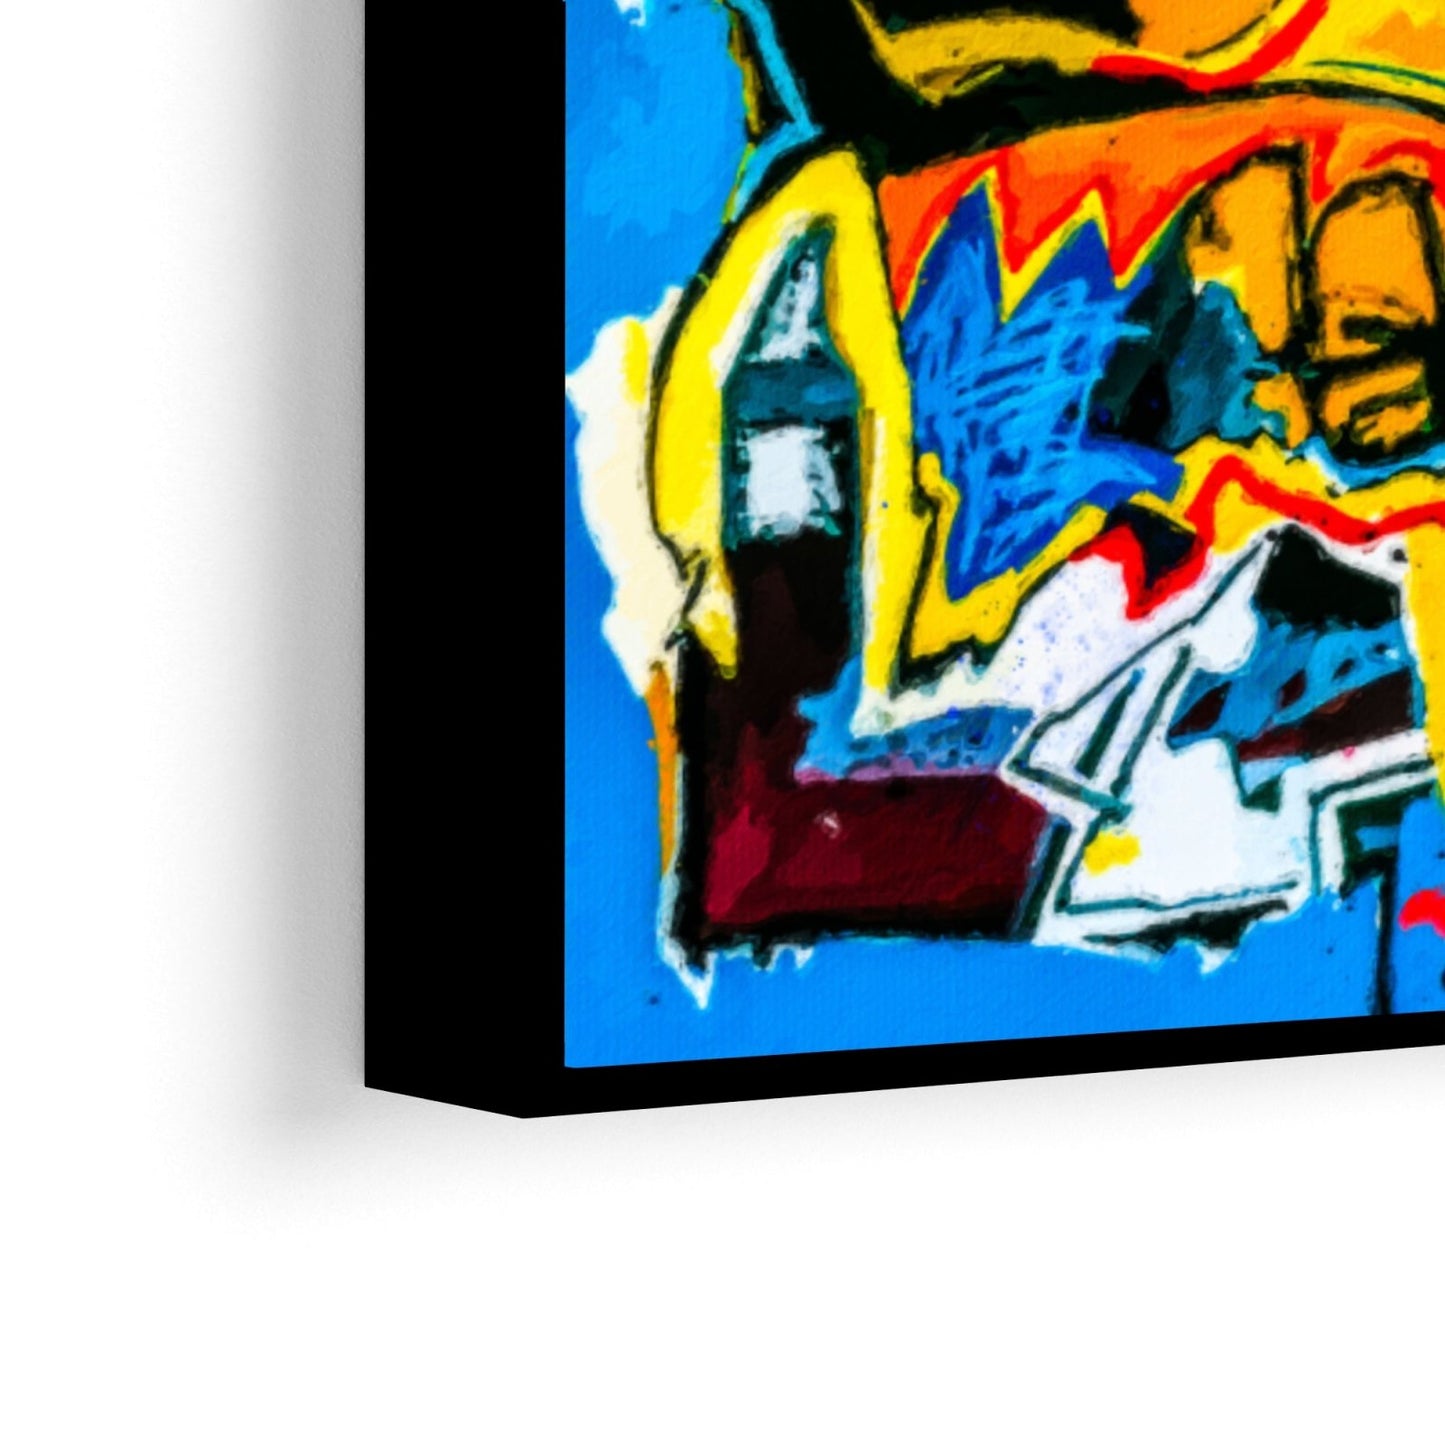 Arte de la pared de la lona de Basquiat